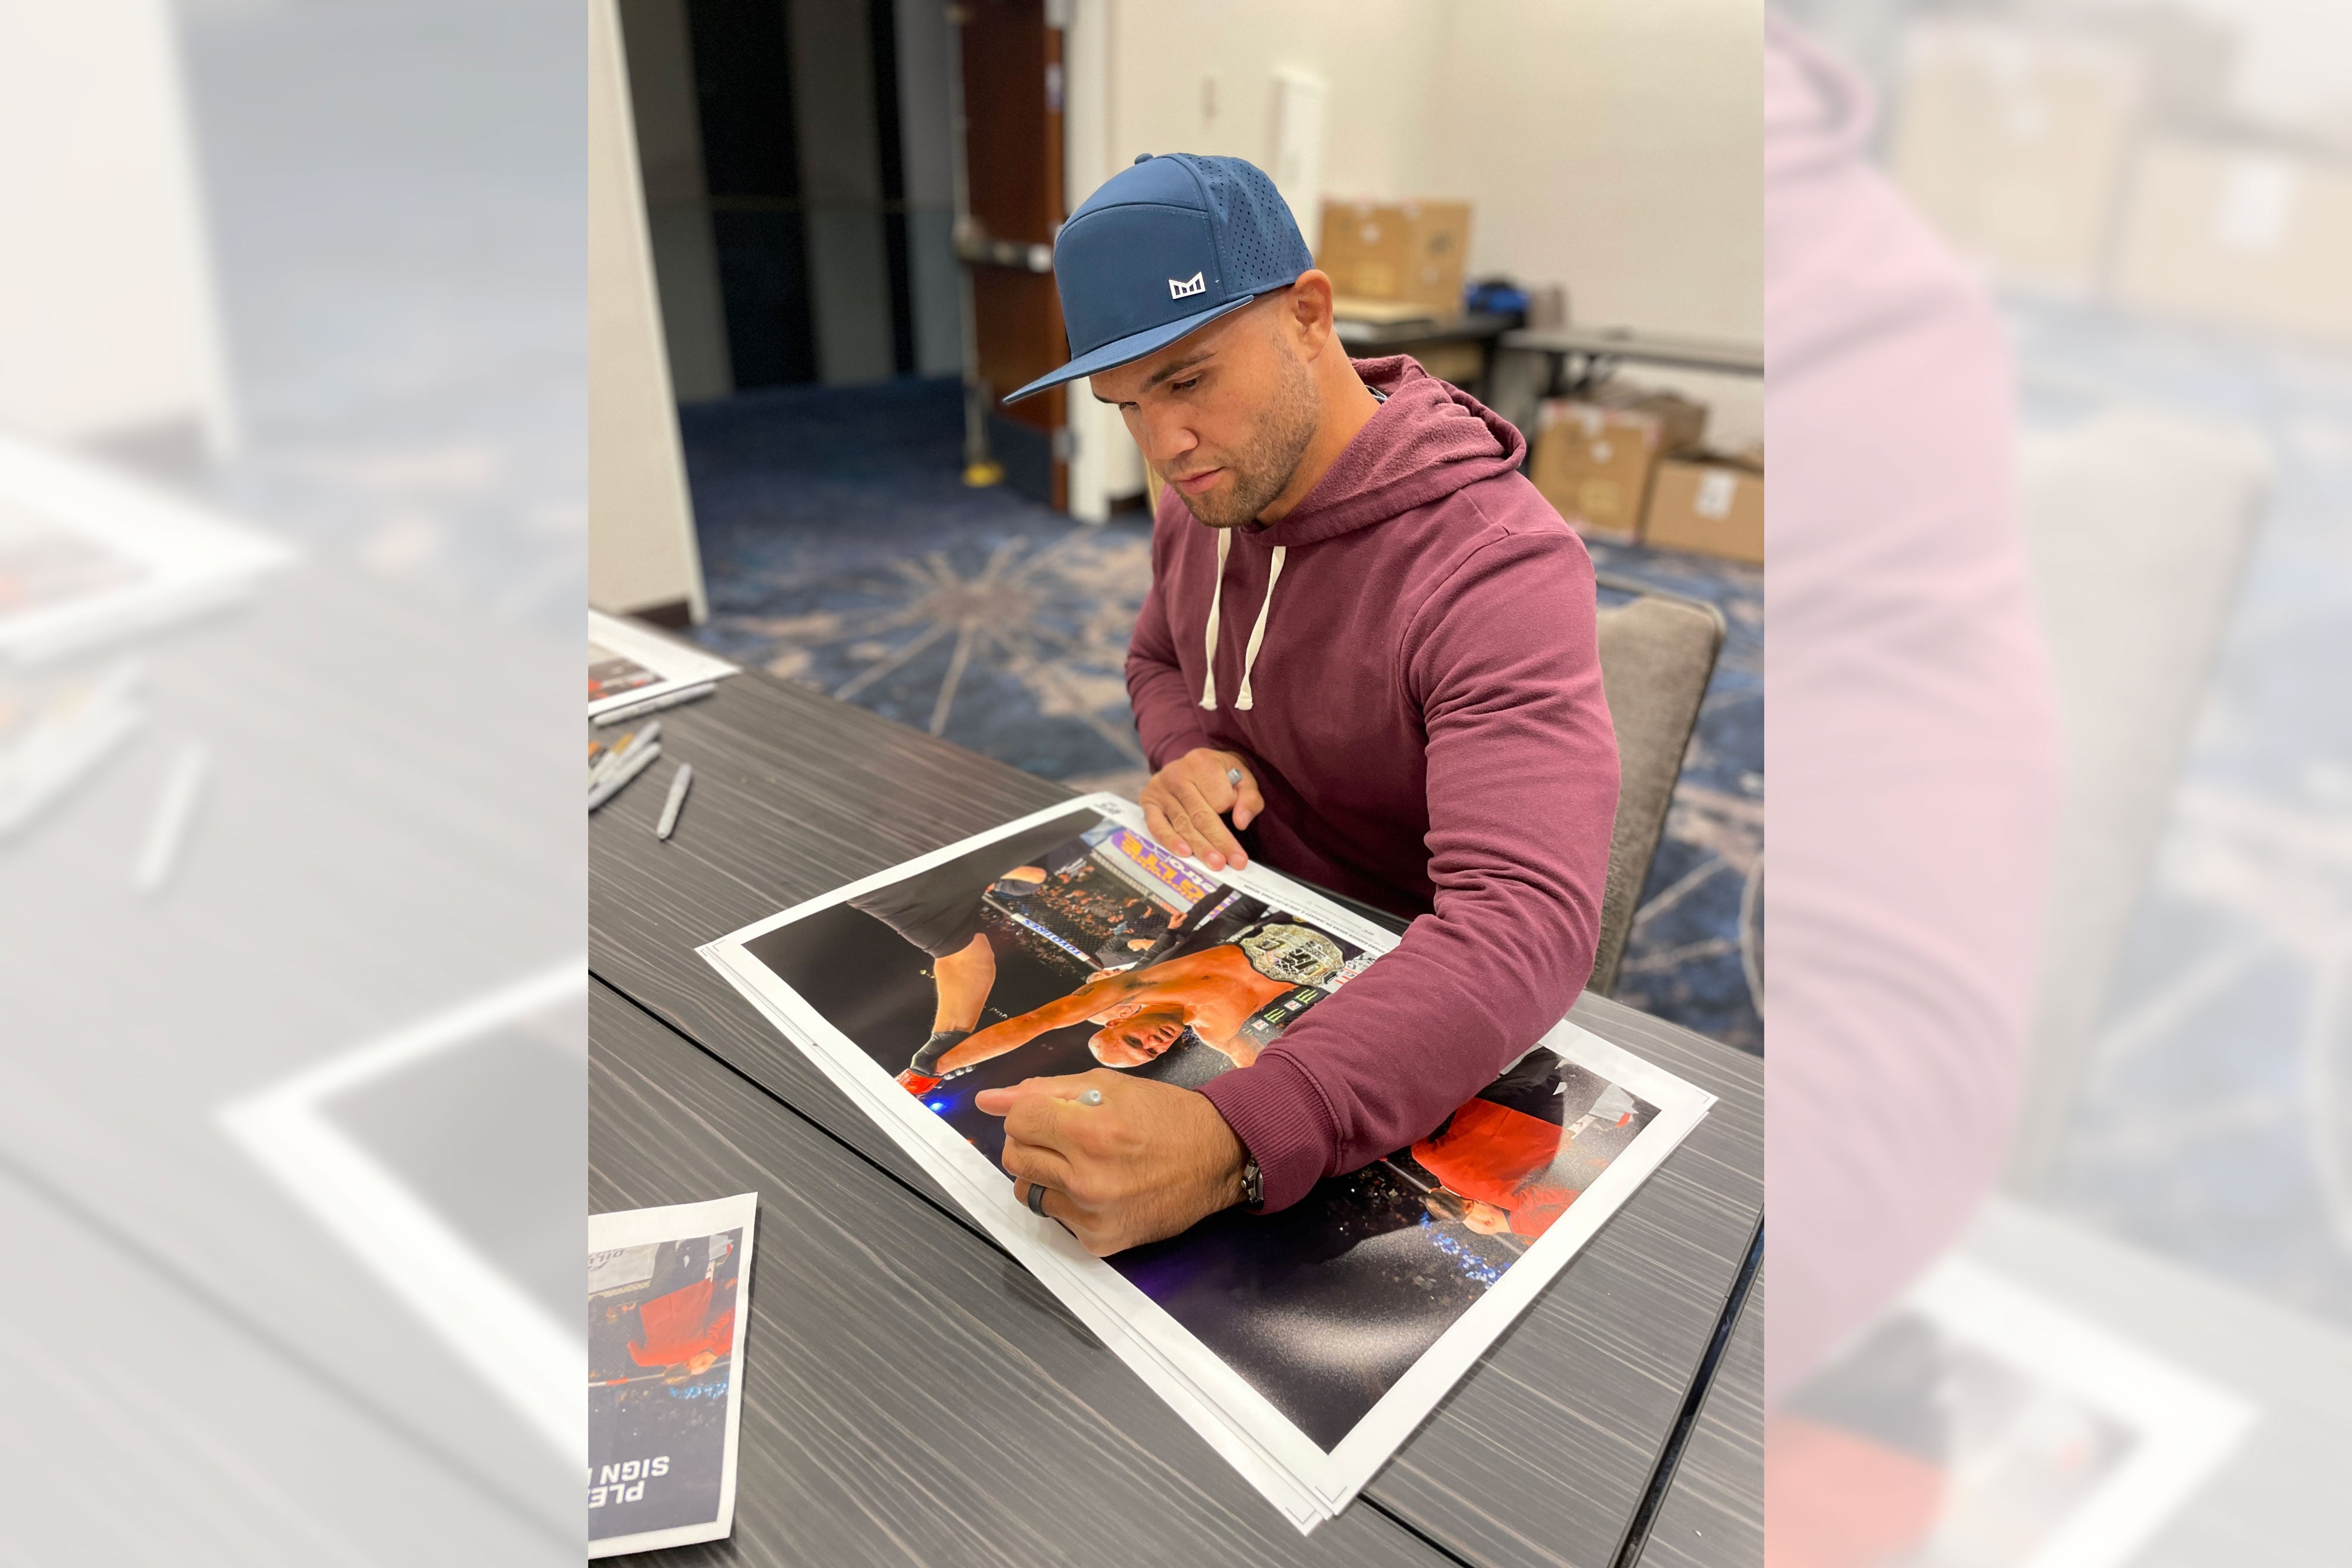 Robbie Lawler Signed Photo UFC 195